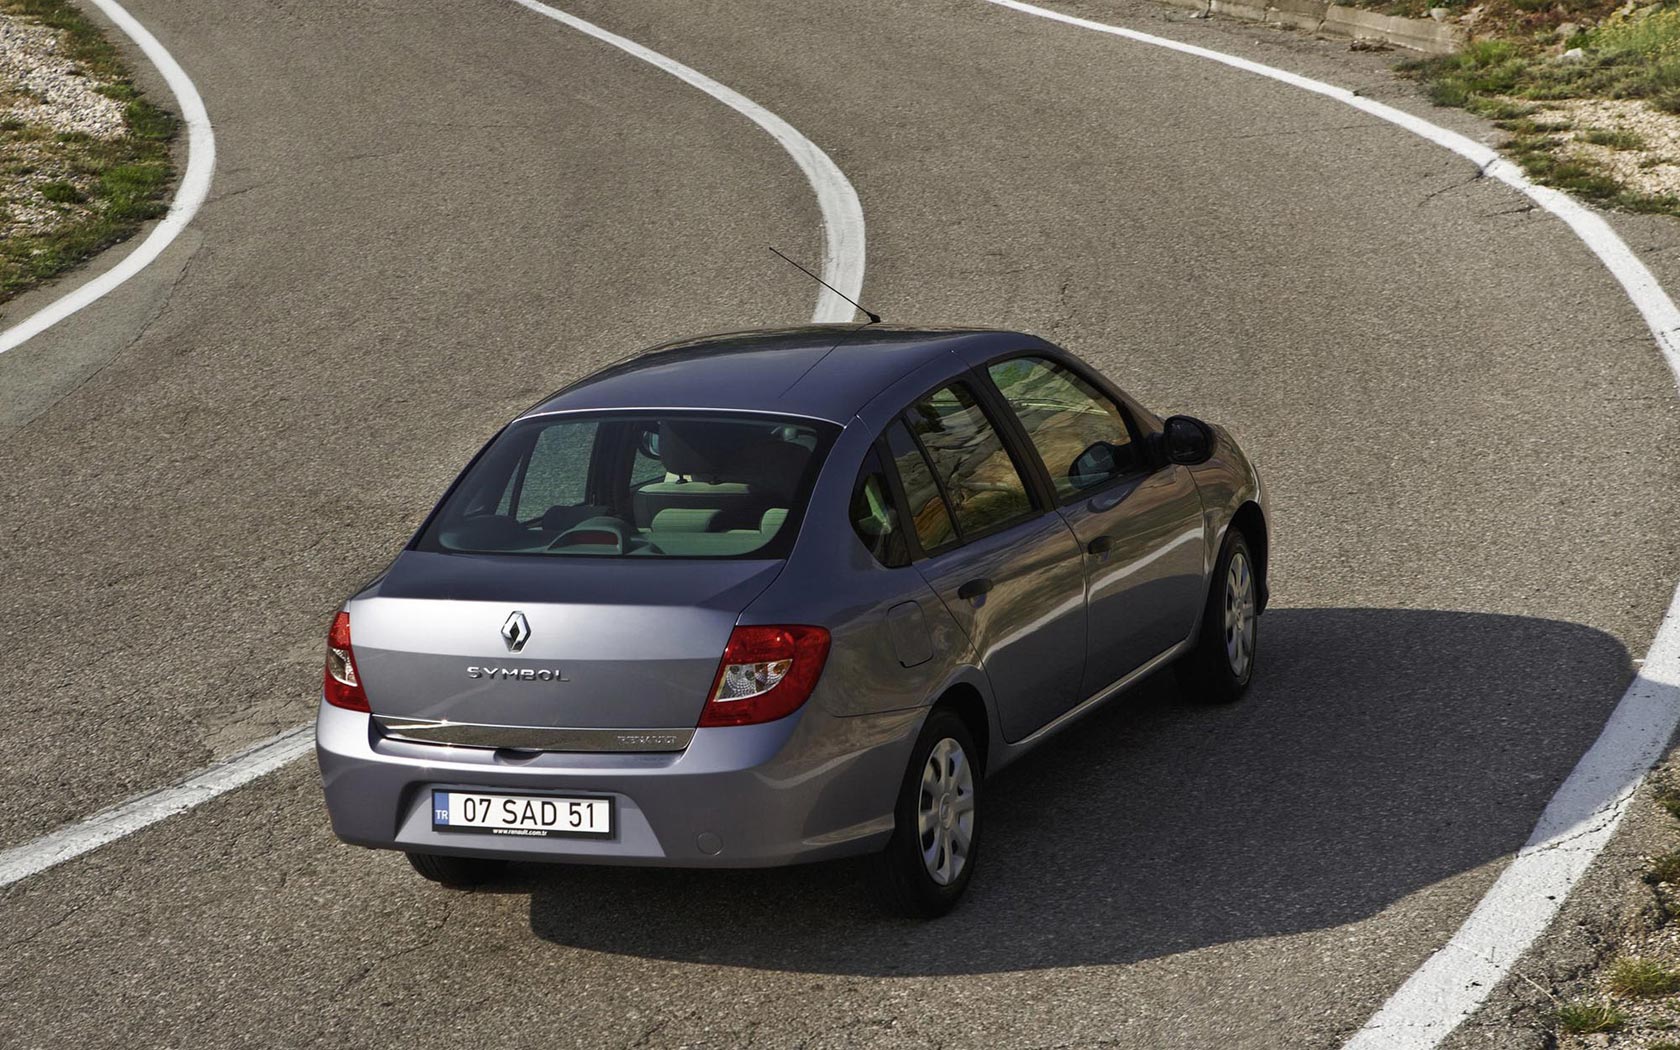  Renault Symbol (2008-2013)